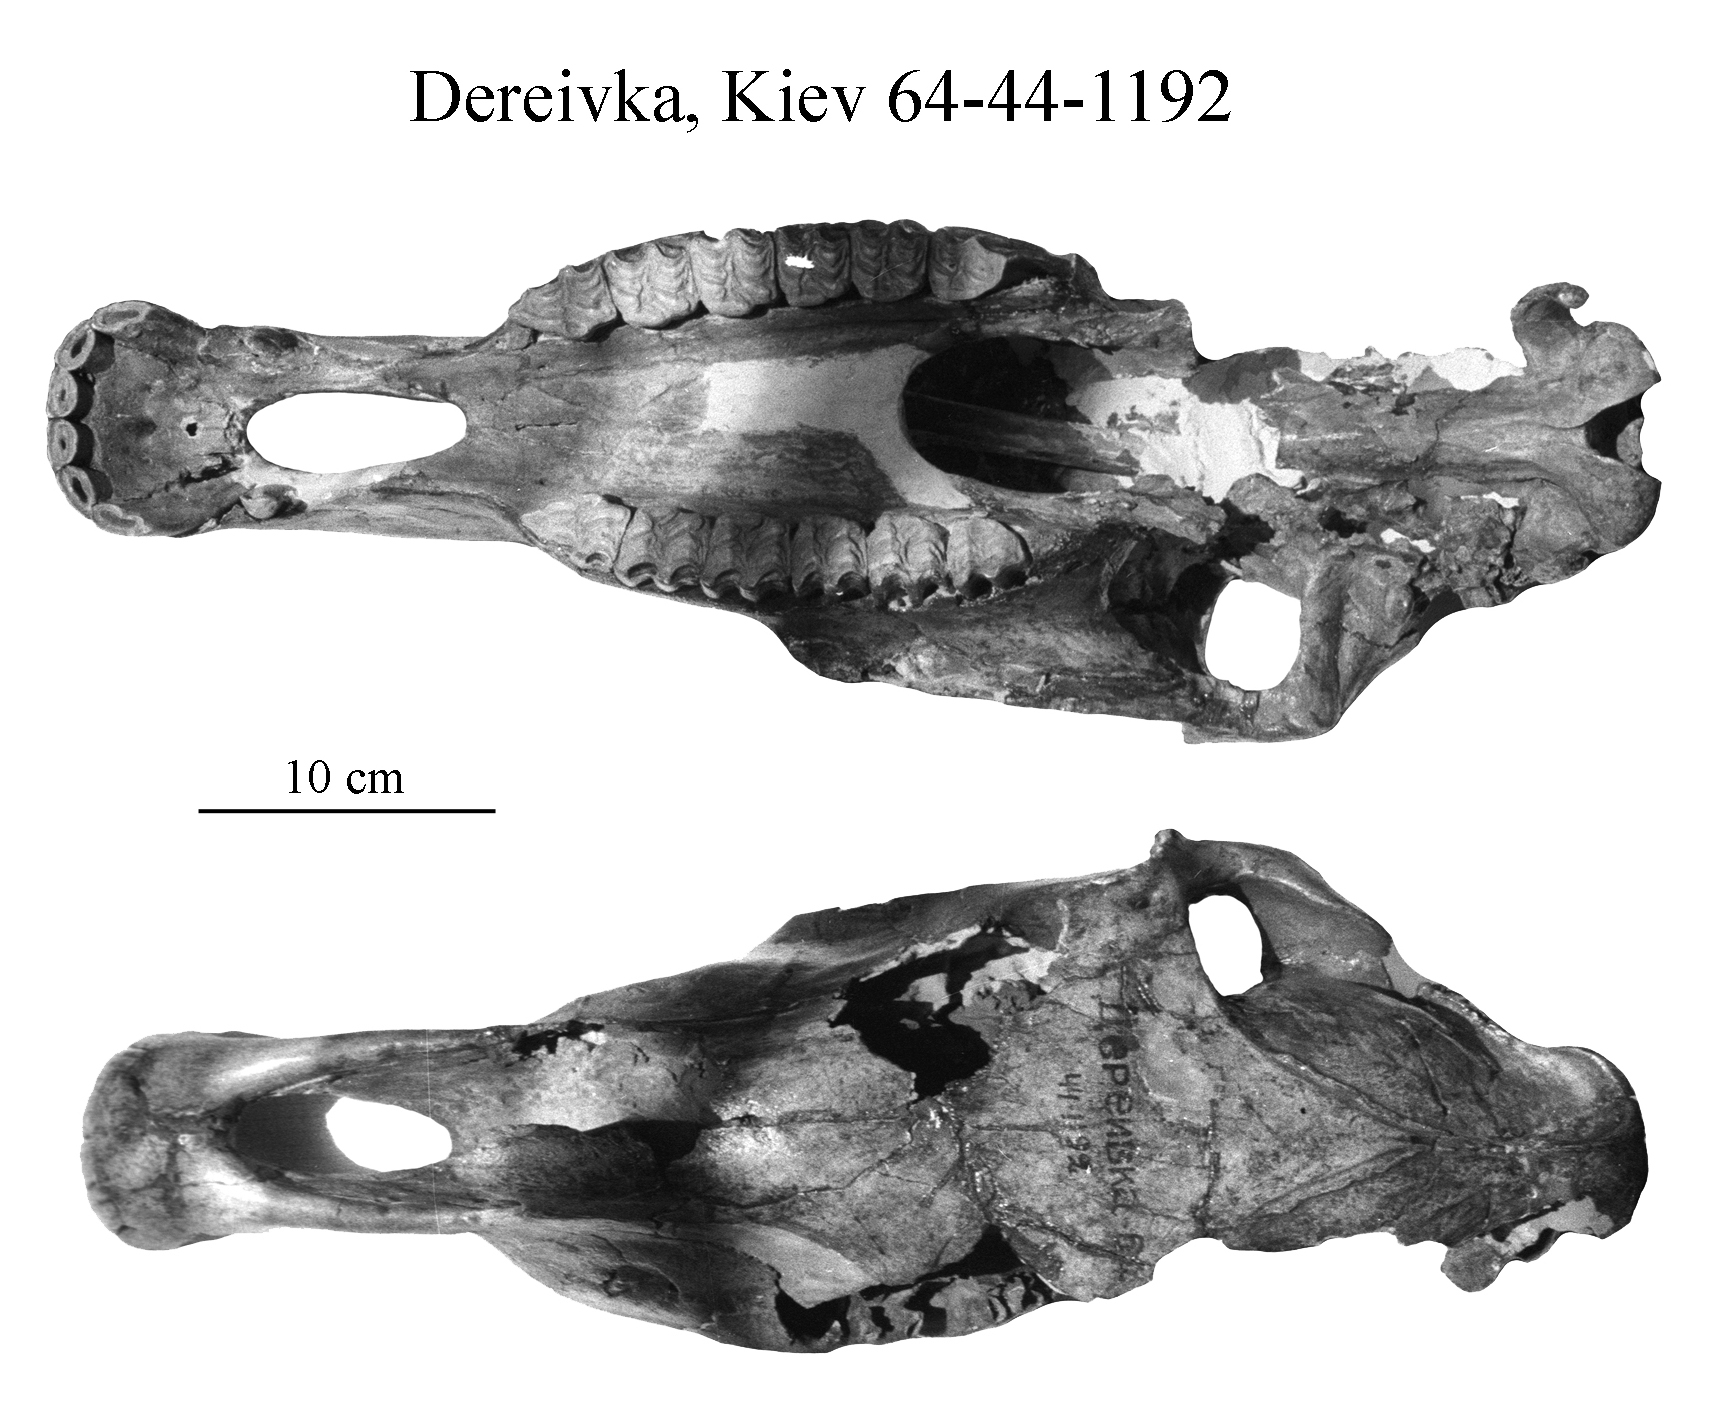 Dereivka Skull, occlusal and superior views